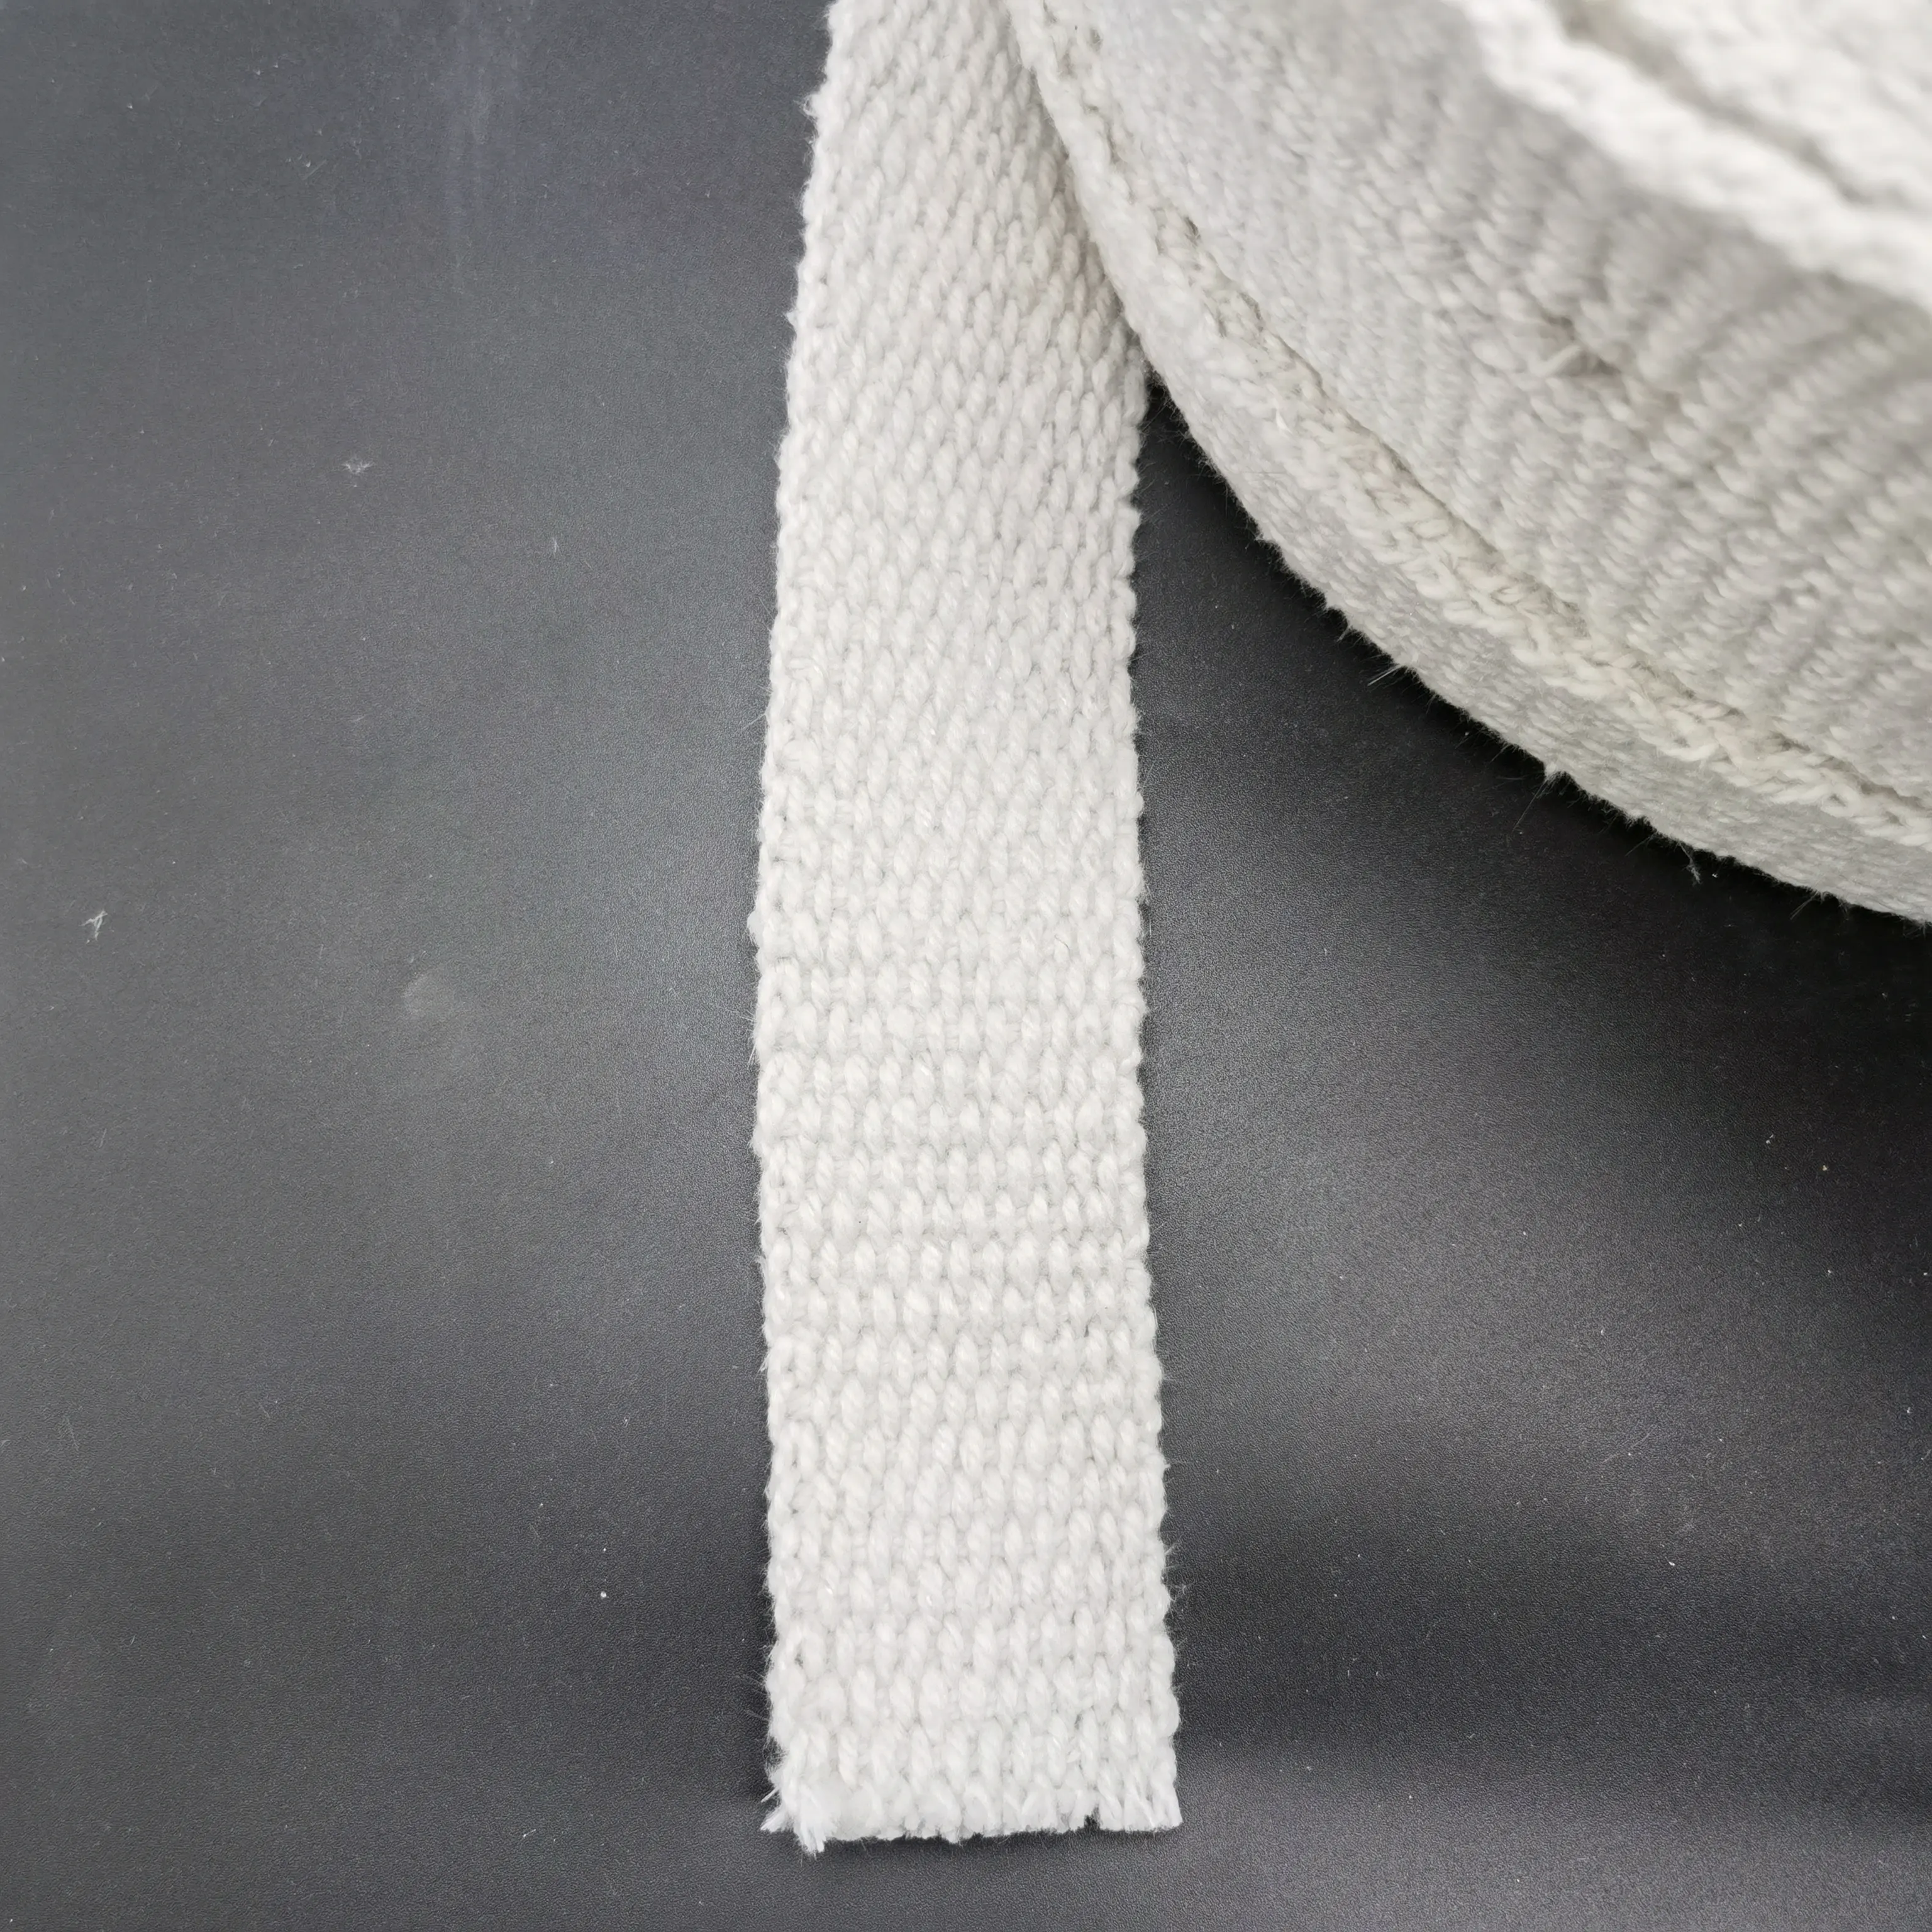 1260 Degree Insulating Non Asbestos Tape Industrial Fireproof Soluble Ceramic Fiber Cloth